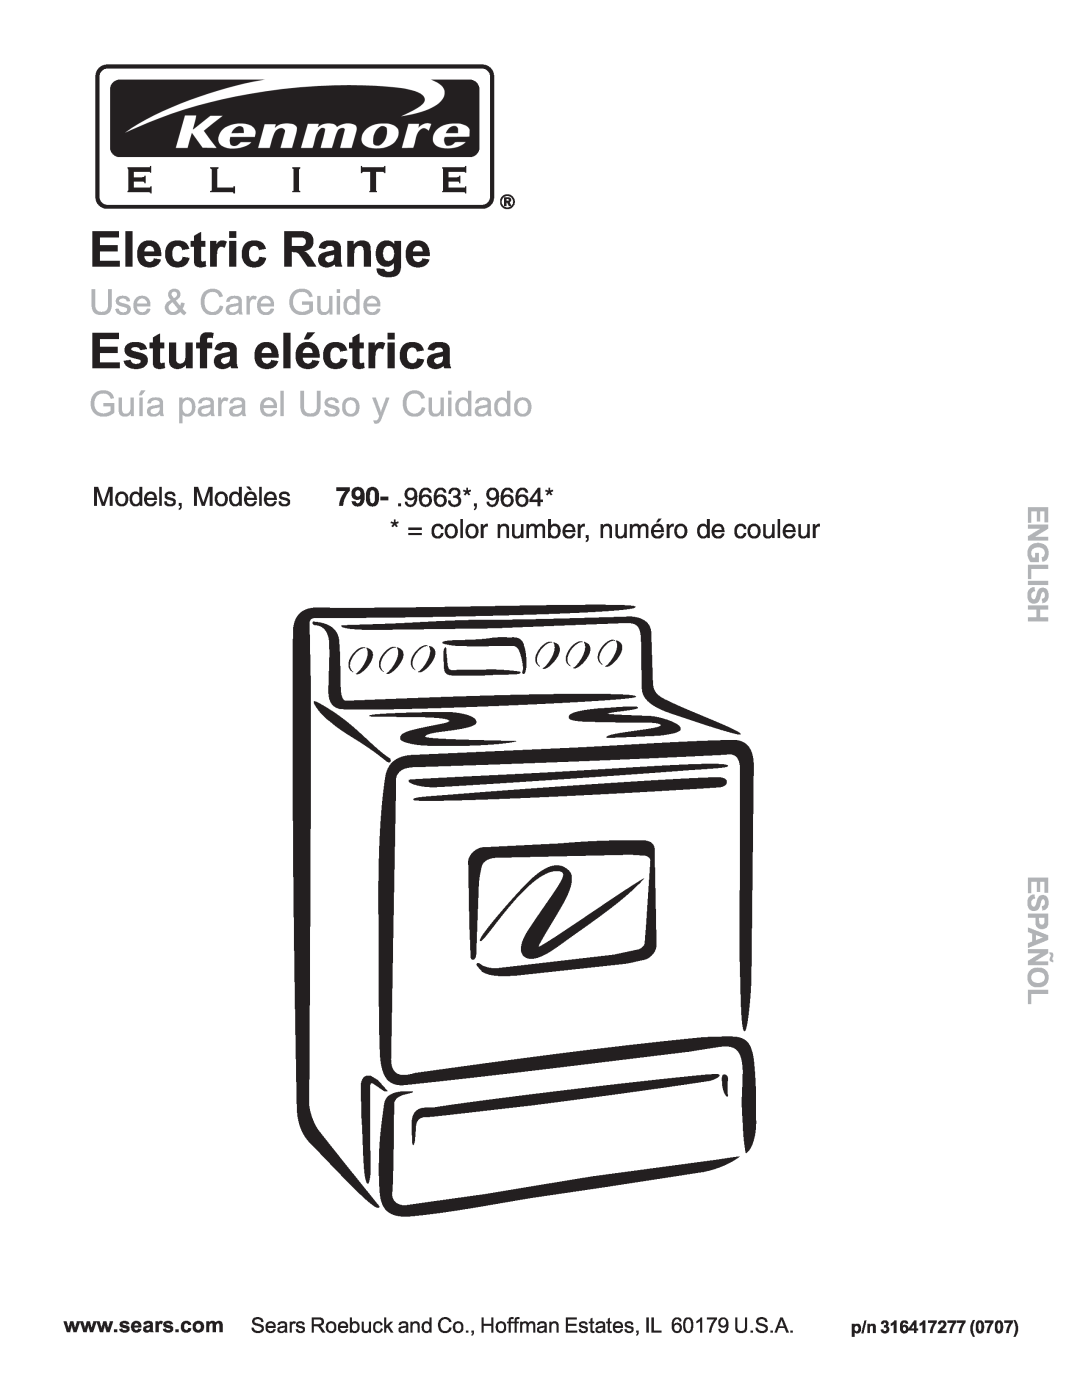 Kenmore 790-9663 manual English Español, p/n 316417277, Electric Range, Estufa eléctrica, Use & Care Guide, 790- .9663 